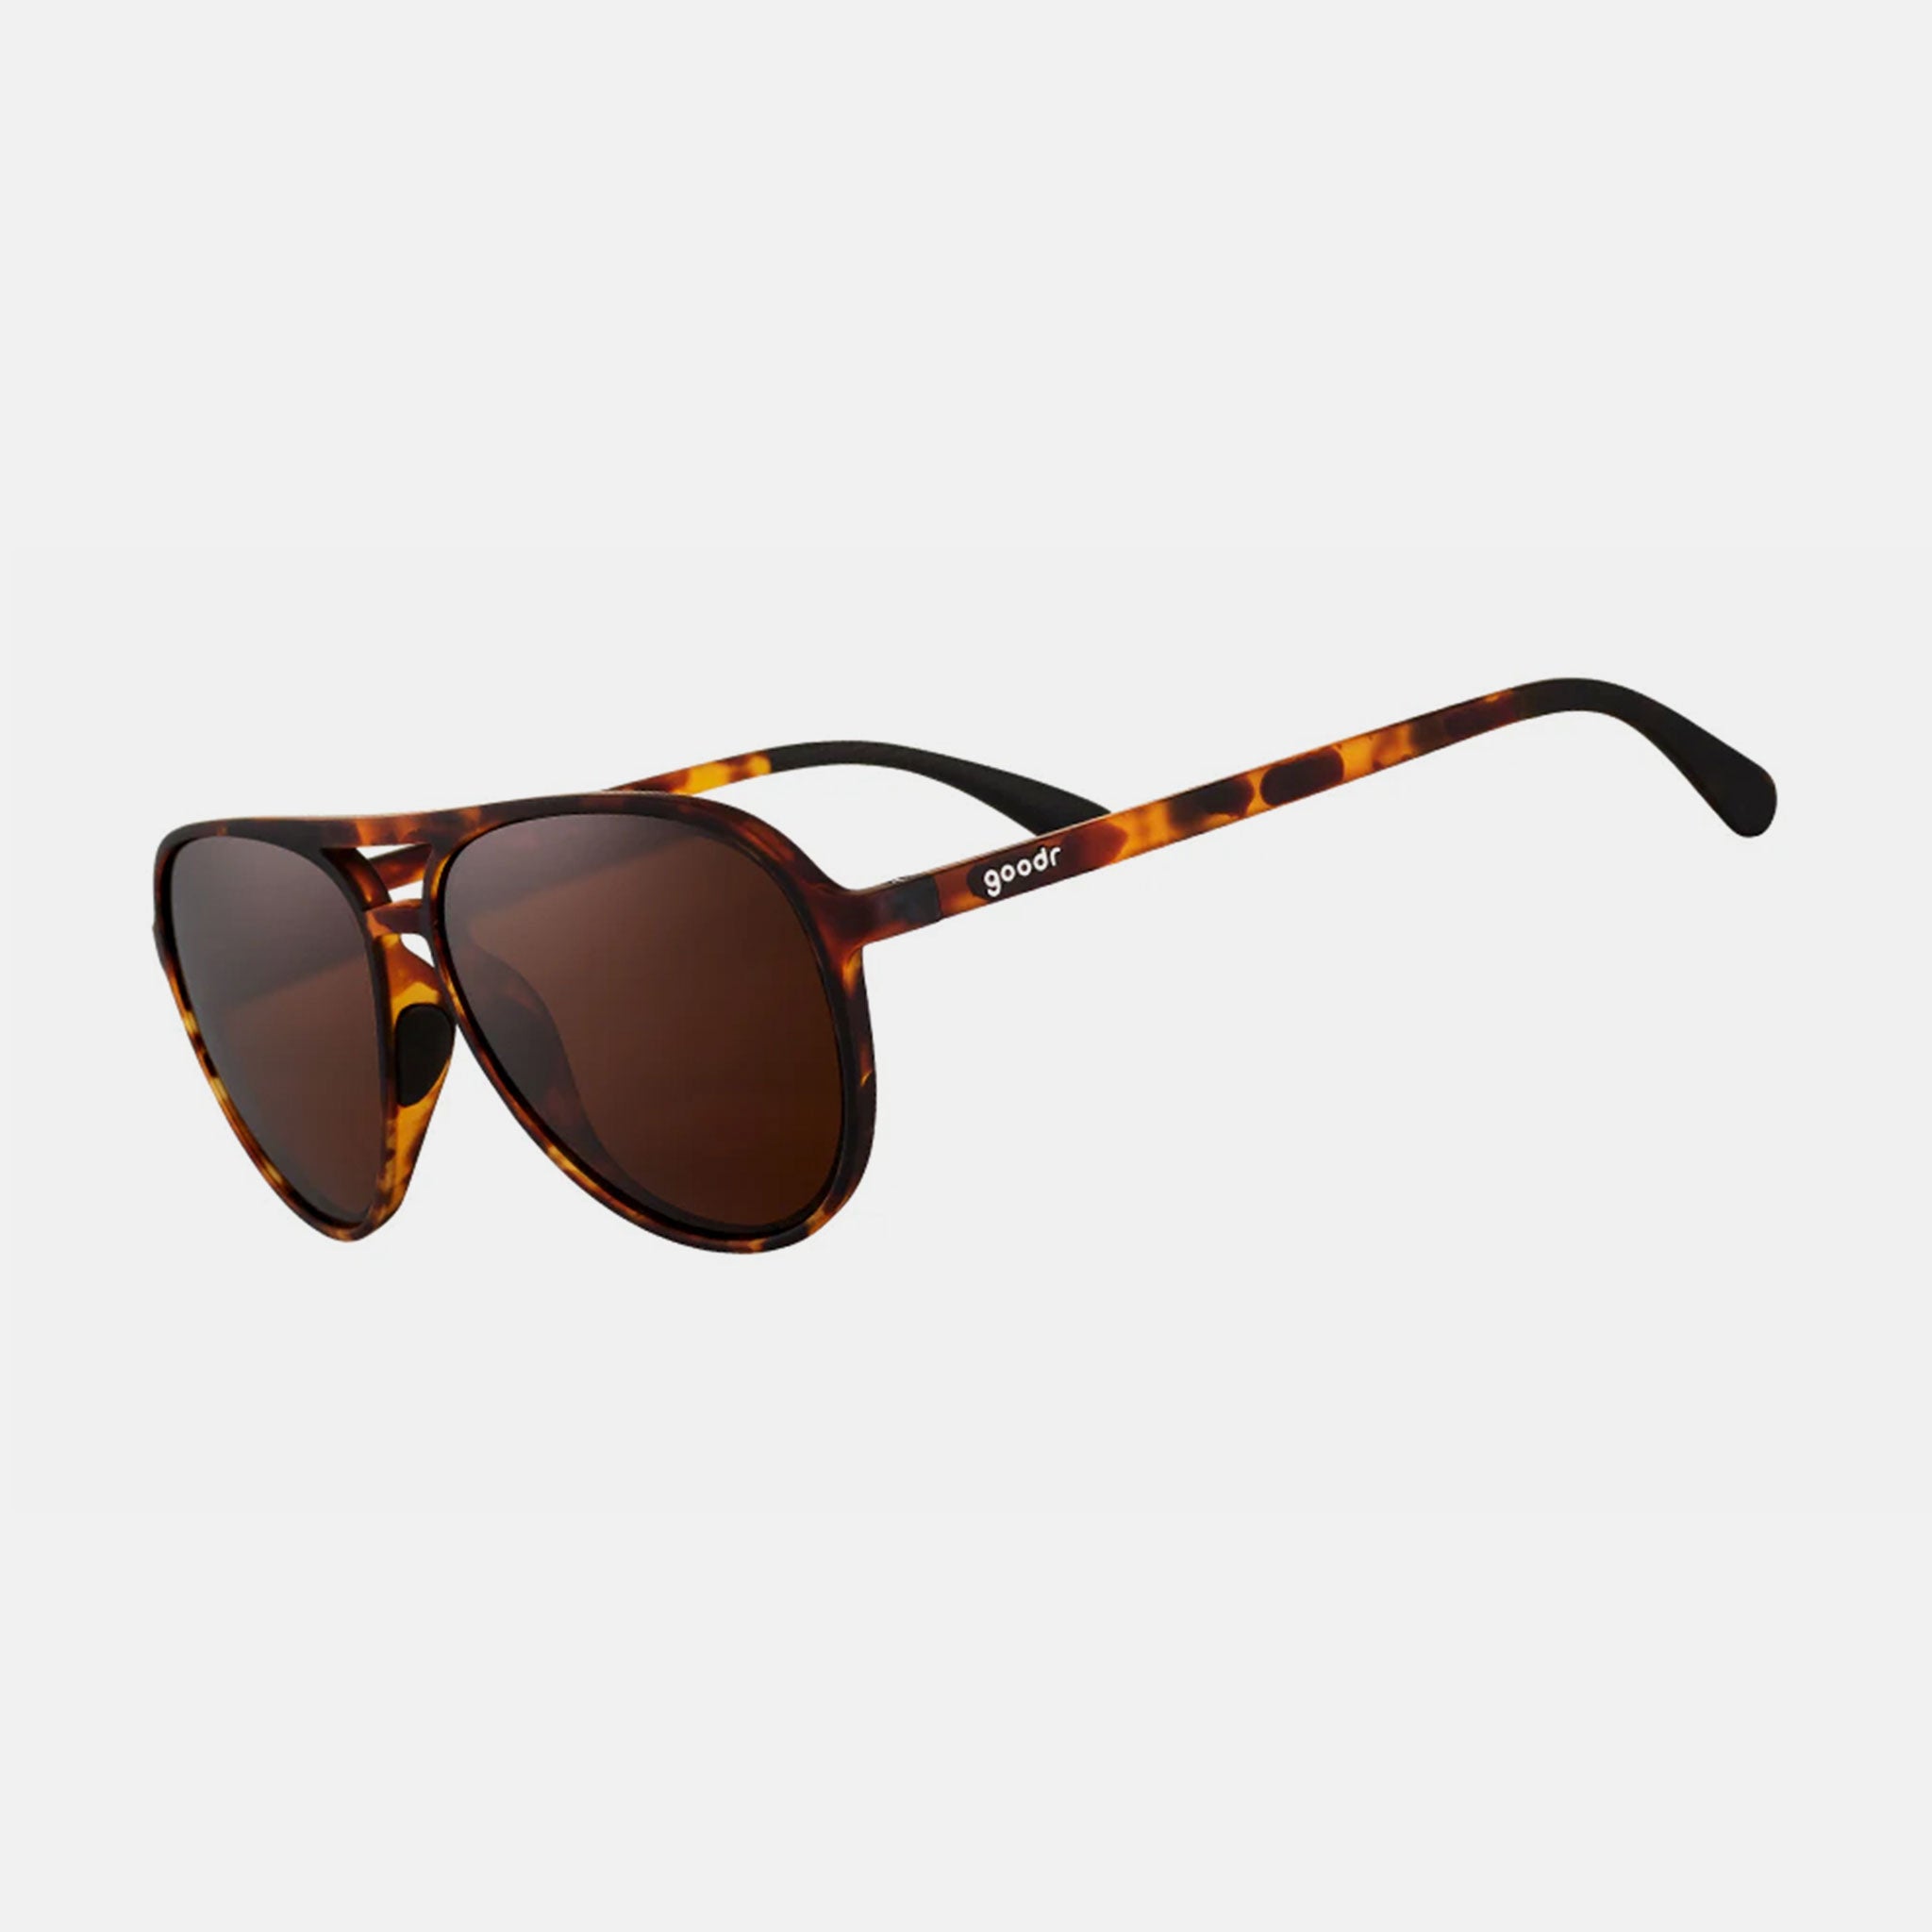 goodr-sunglasses-tortoiseshell-aviator-amelia_01.jpg